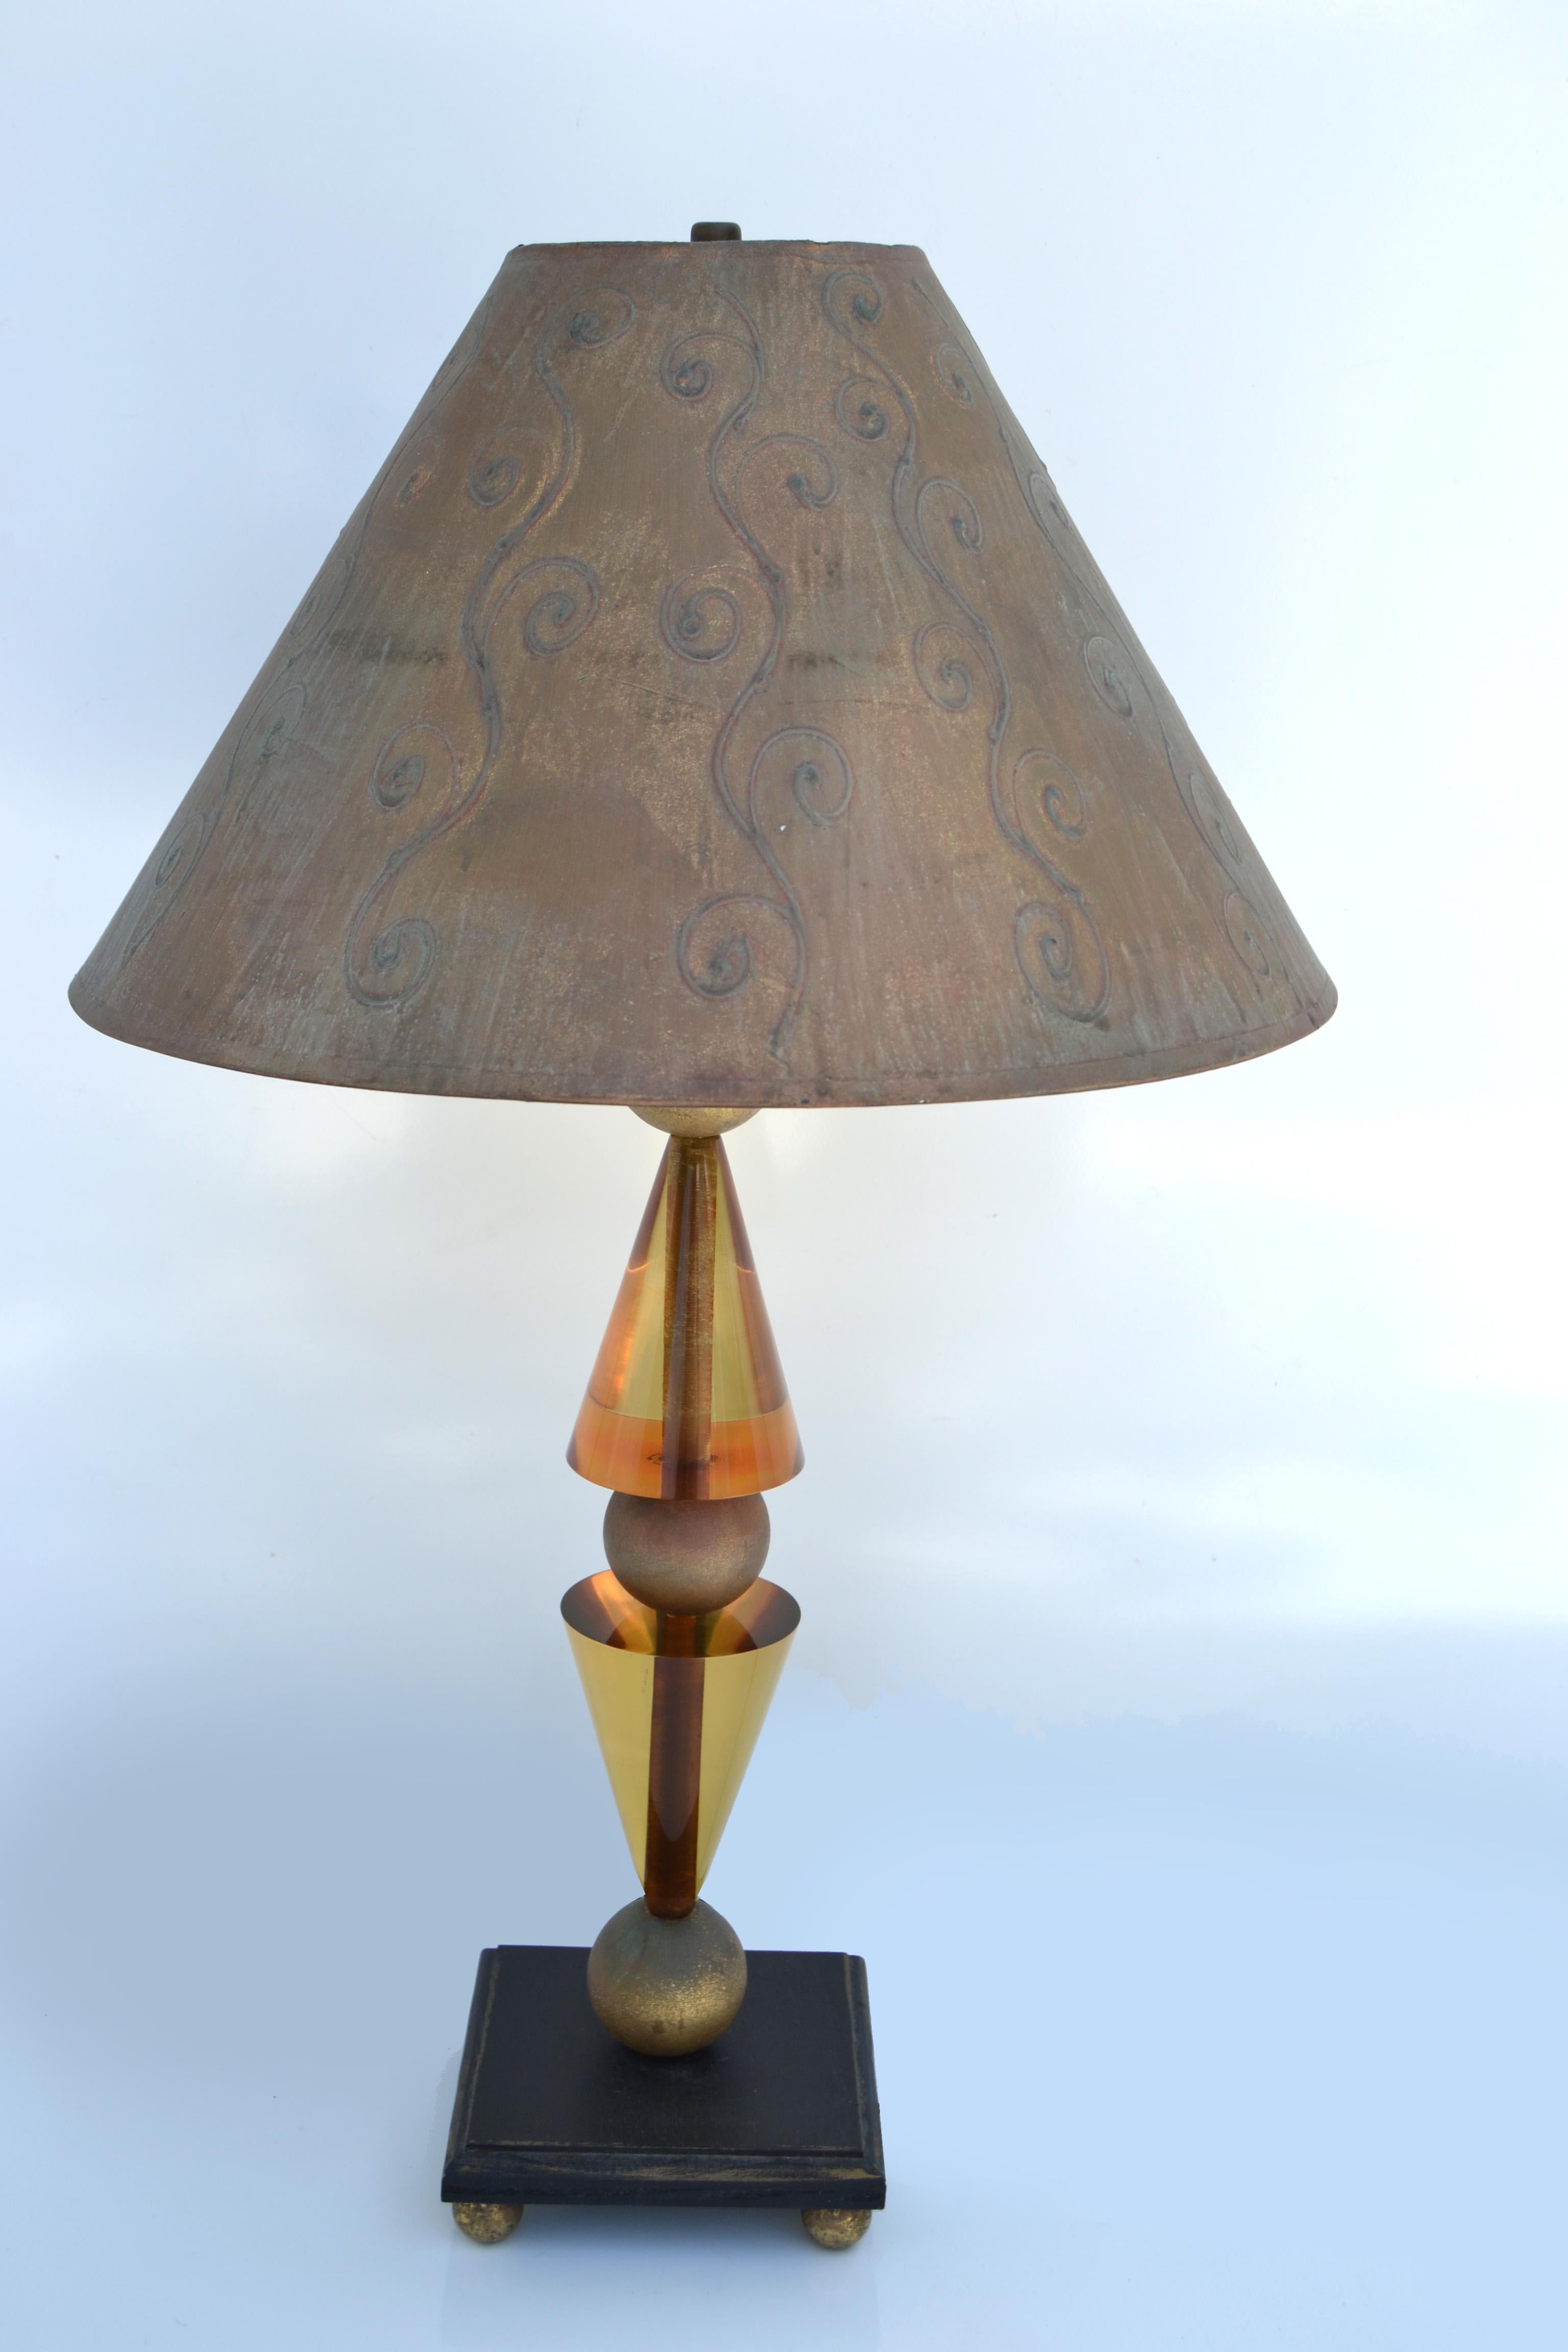 Hivo Van Teal Table Lamp Amber Gold Lucite & Wood Original Shade Midcentury 1979 For Sale 4